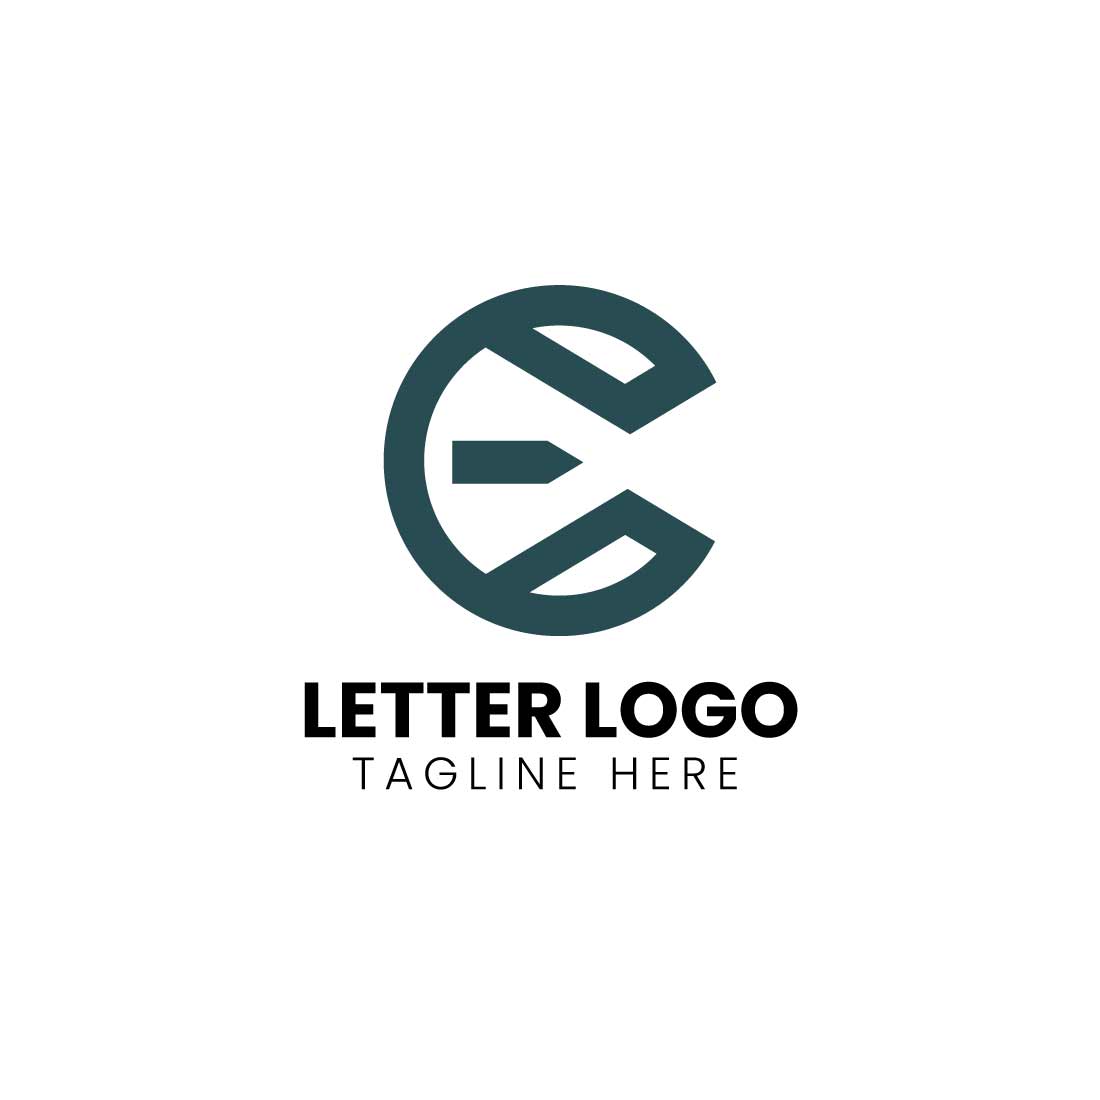 Corporate Letter CE logo design preview image.